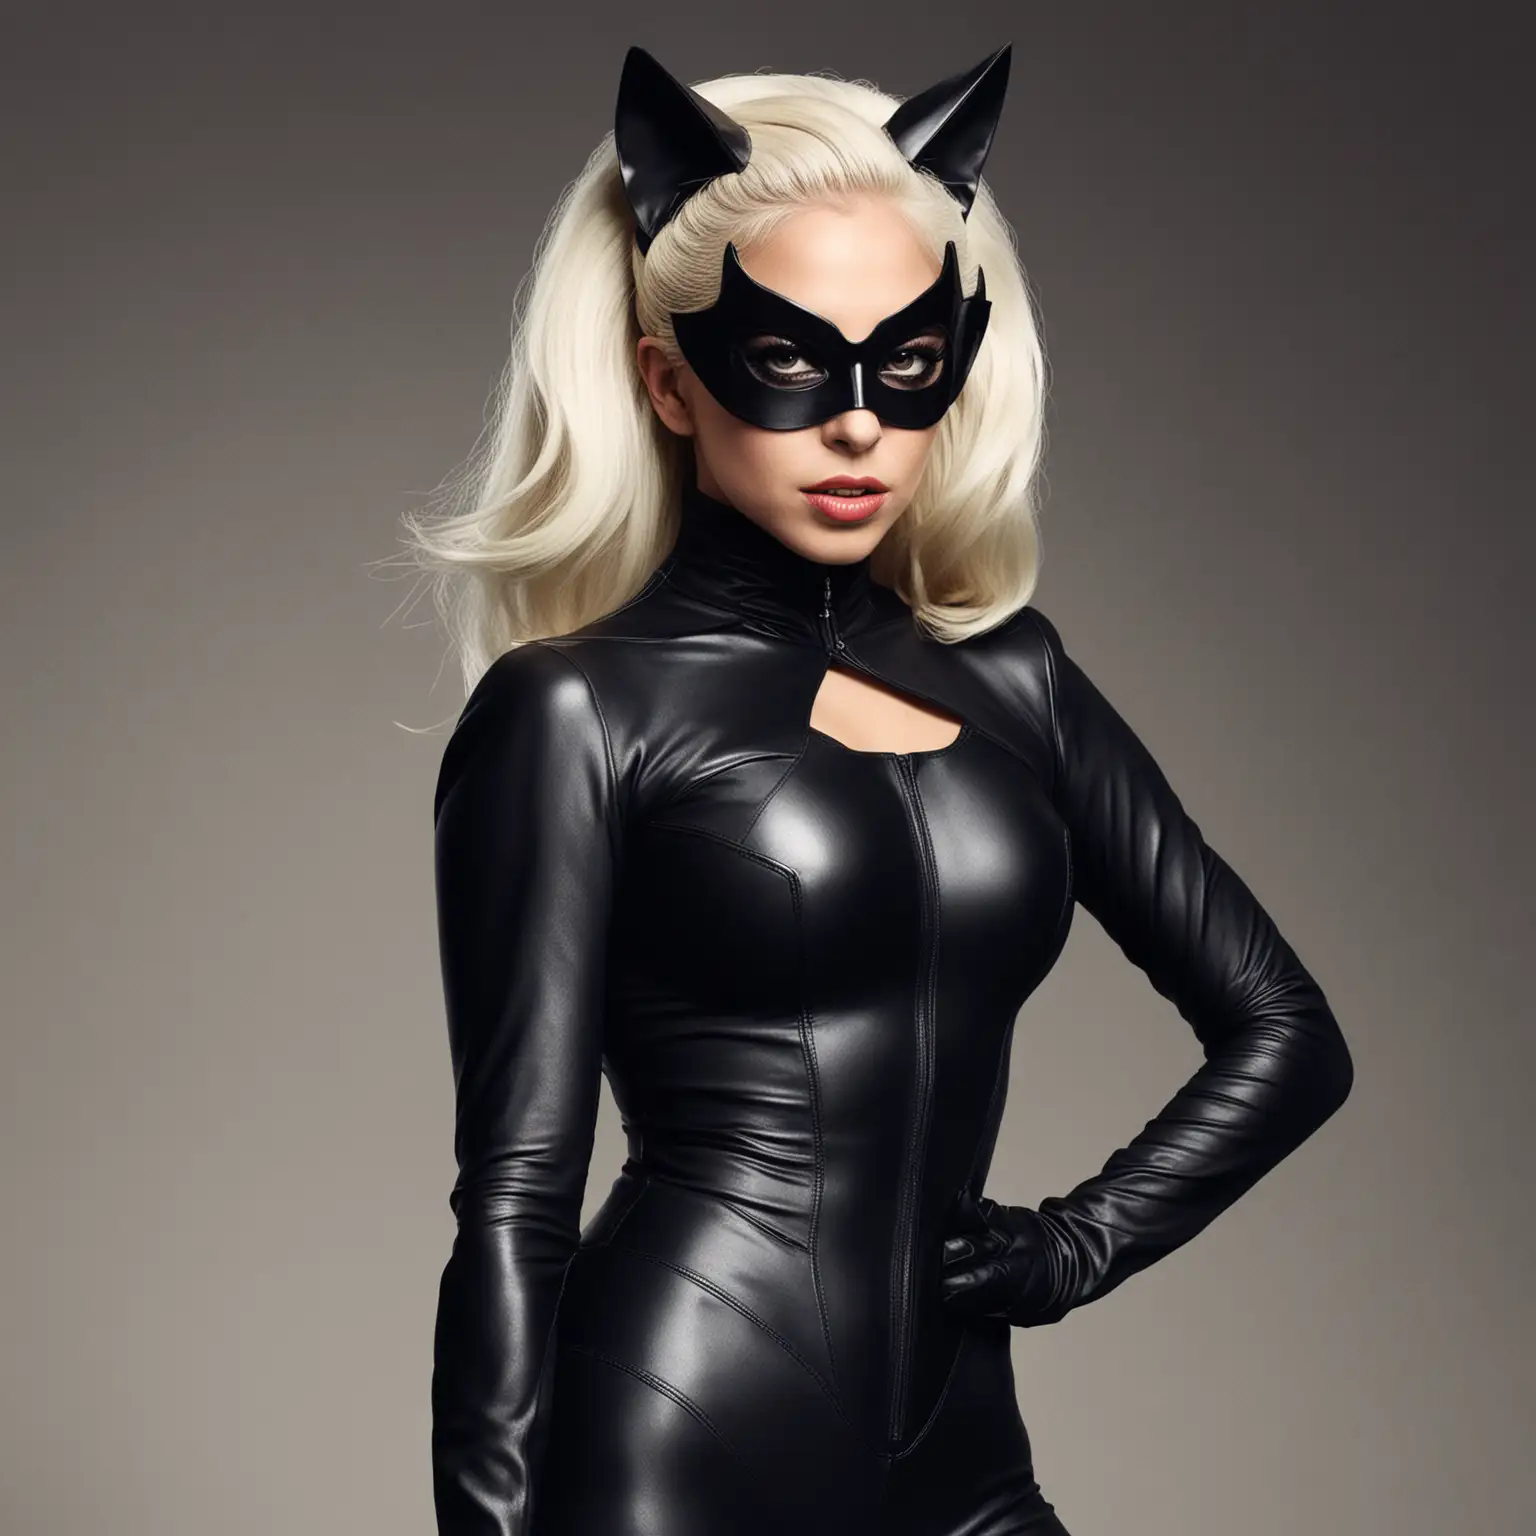 Lady Gaga Portrays Catwoman in Vibrant Gotham City Scene